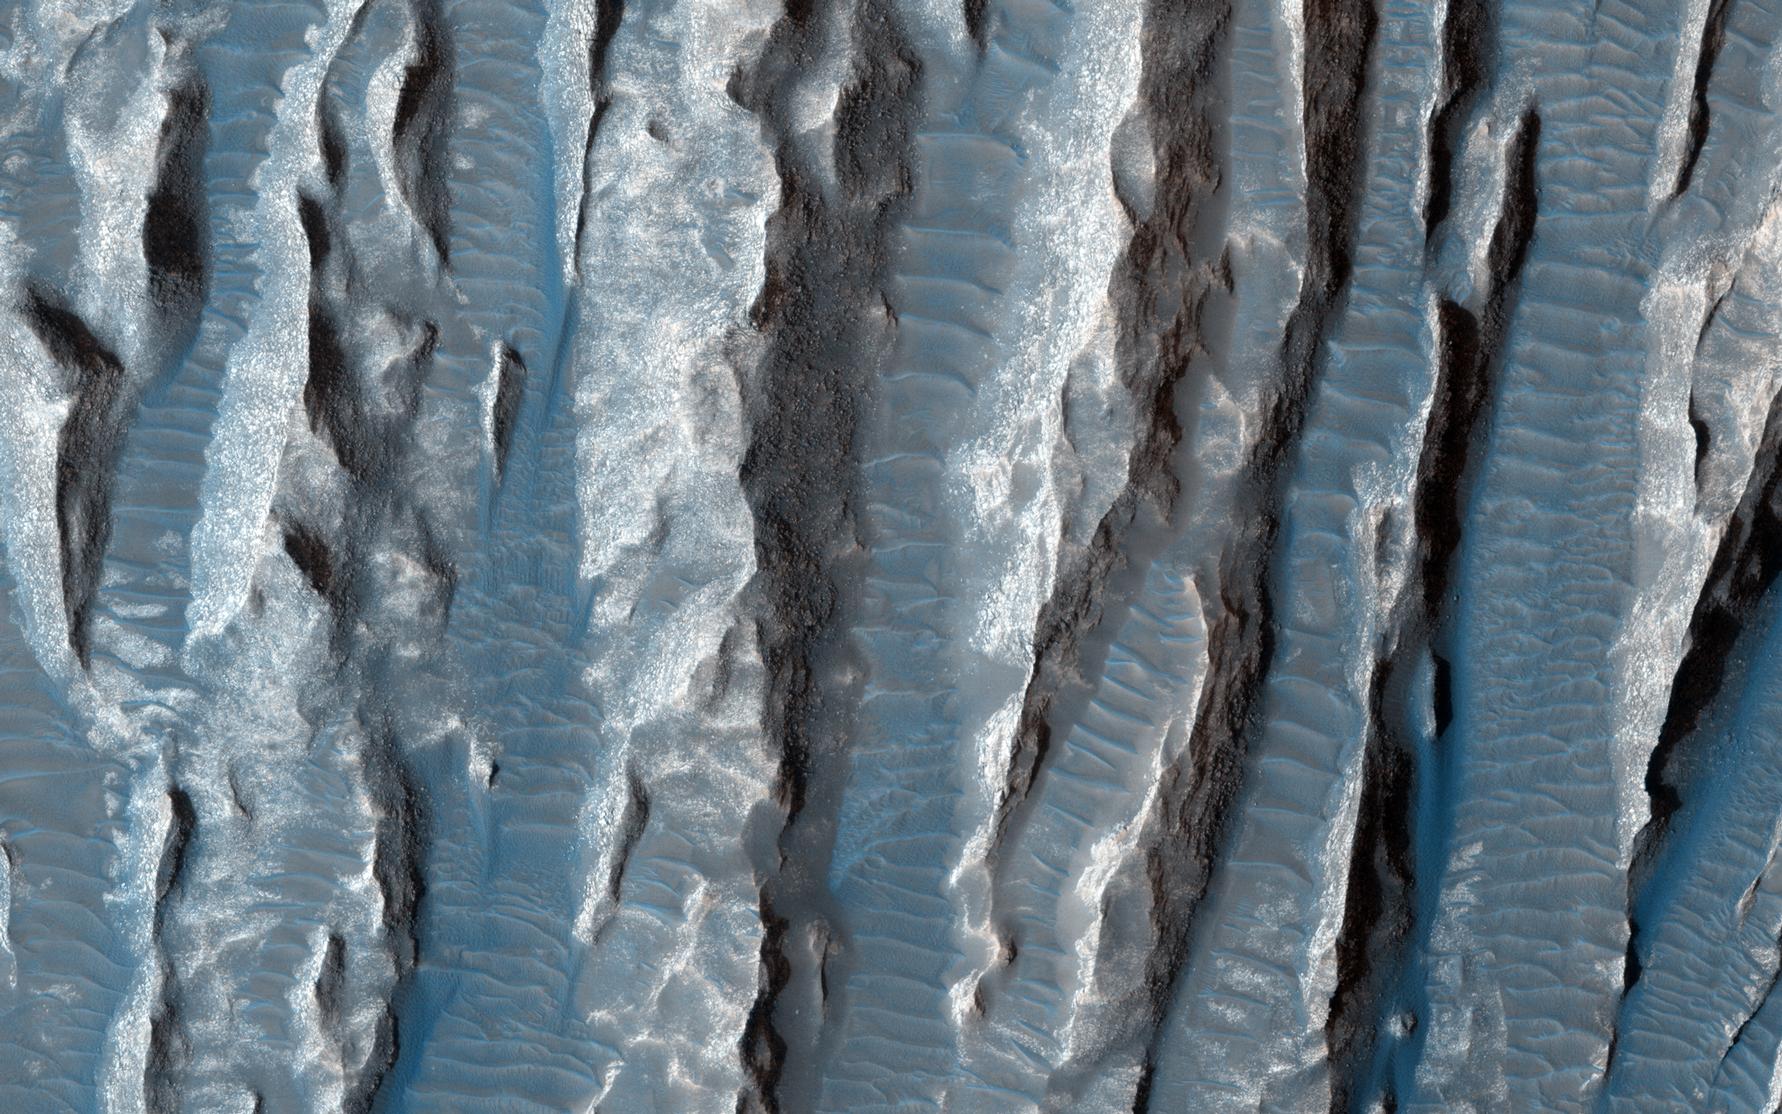 Yardangs in Arsinoes Chaos, Mars